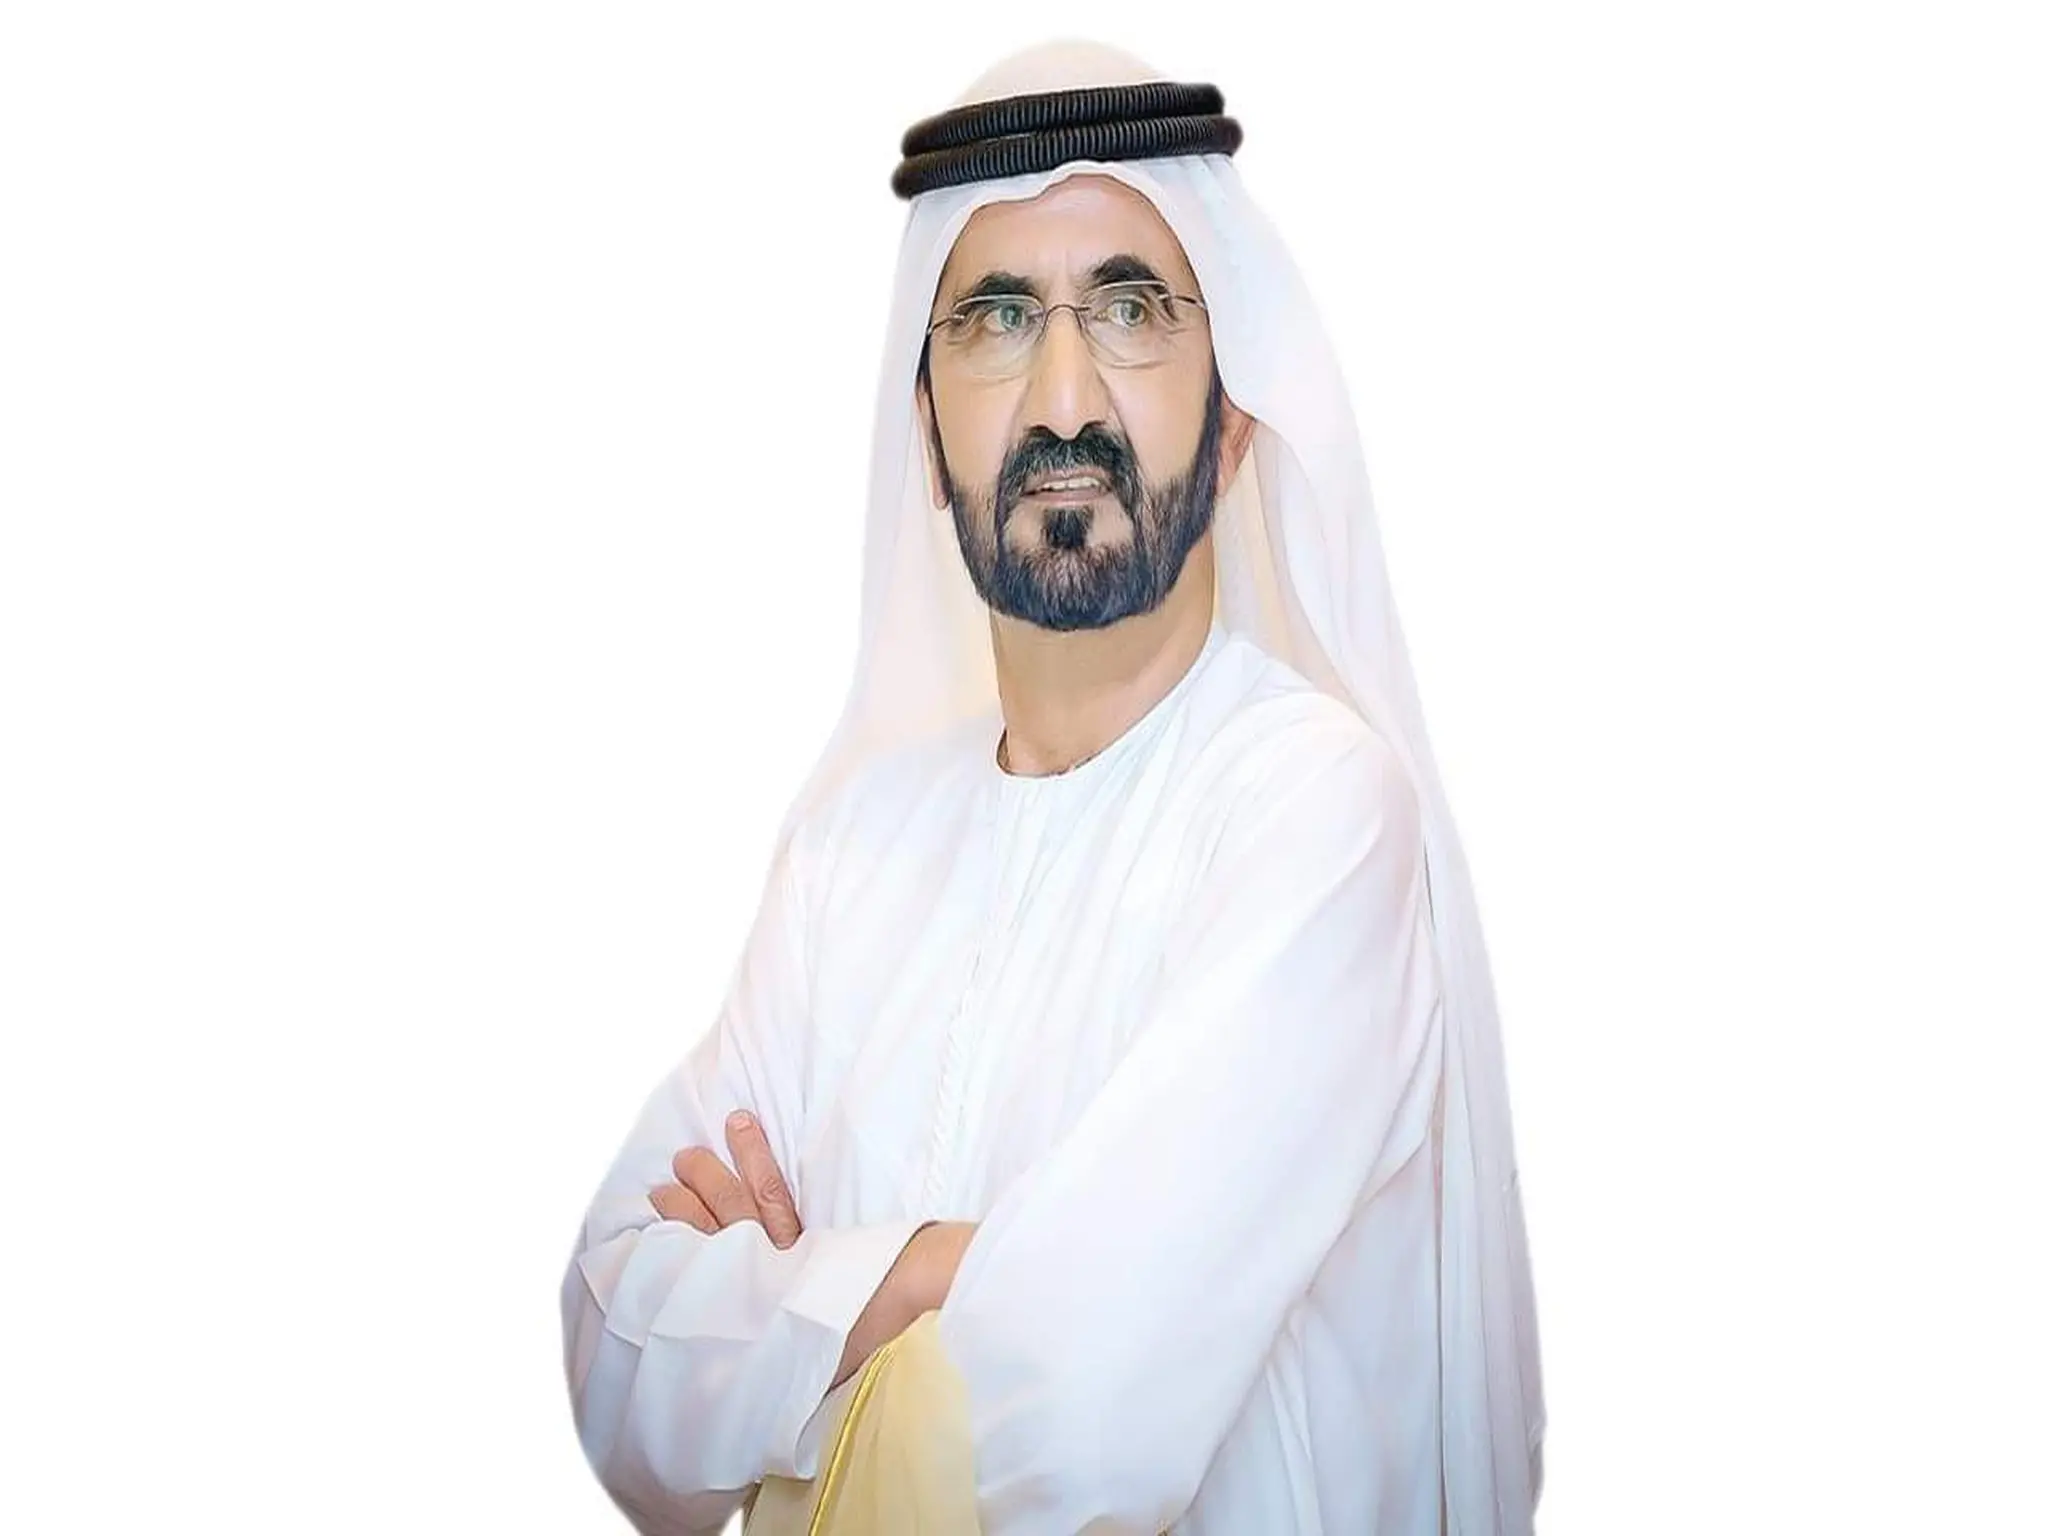 UAE: Sheikh Mohammed bin Rashid announces good news